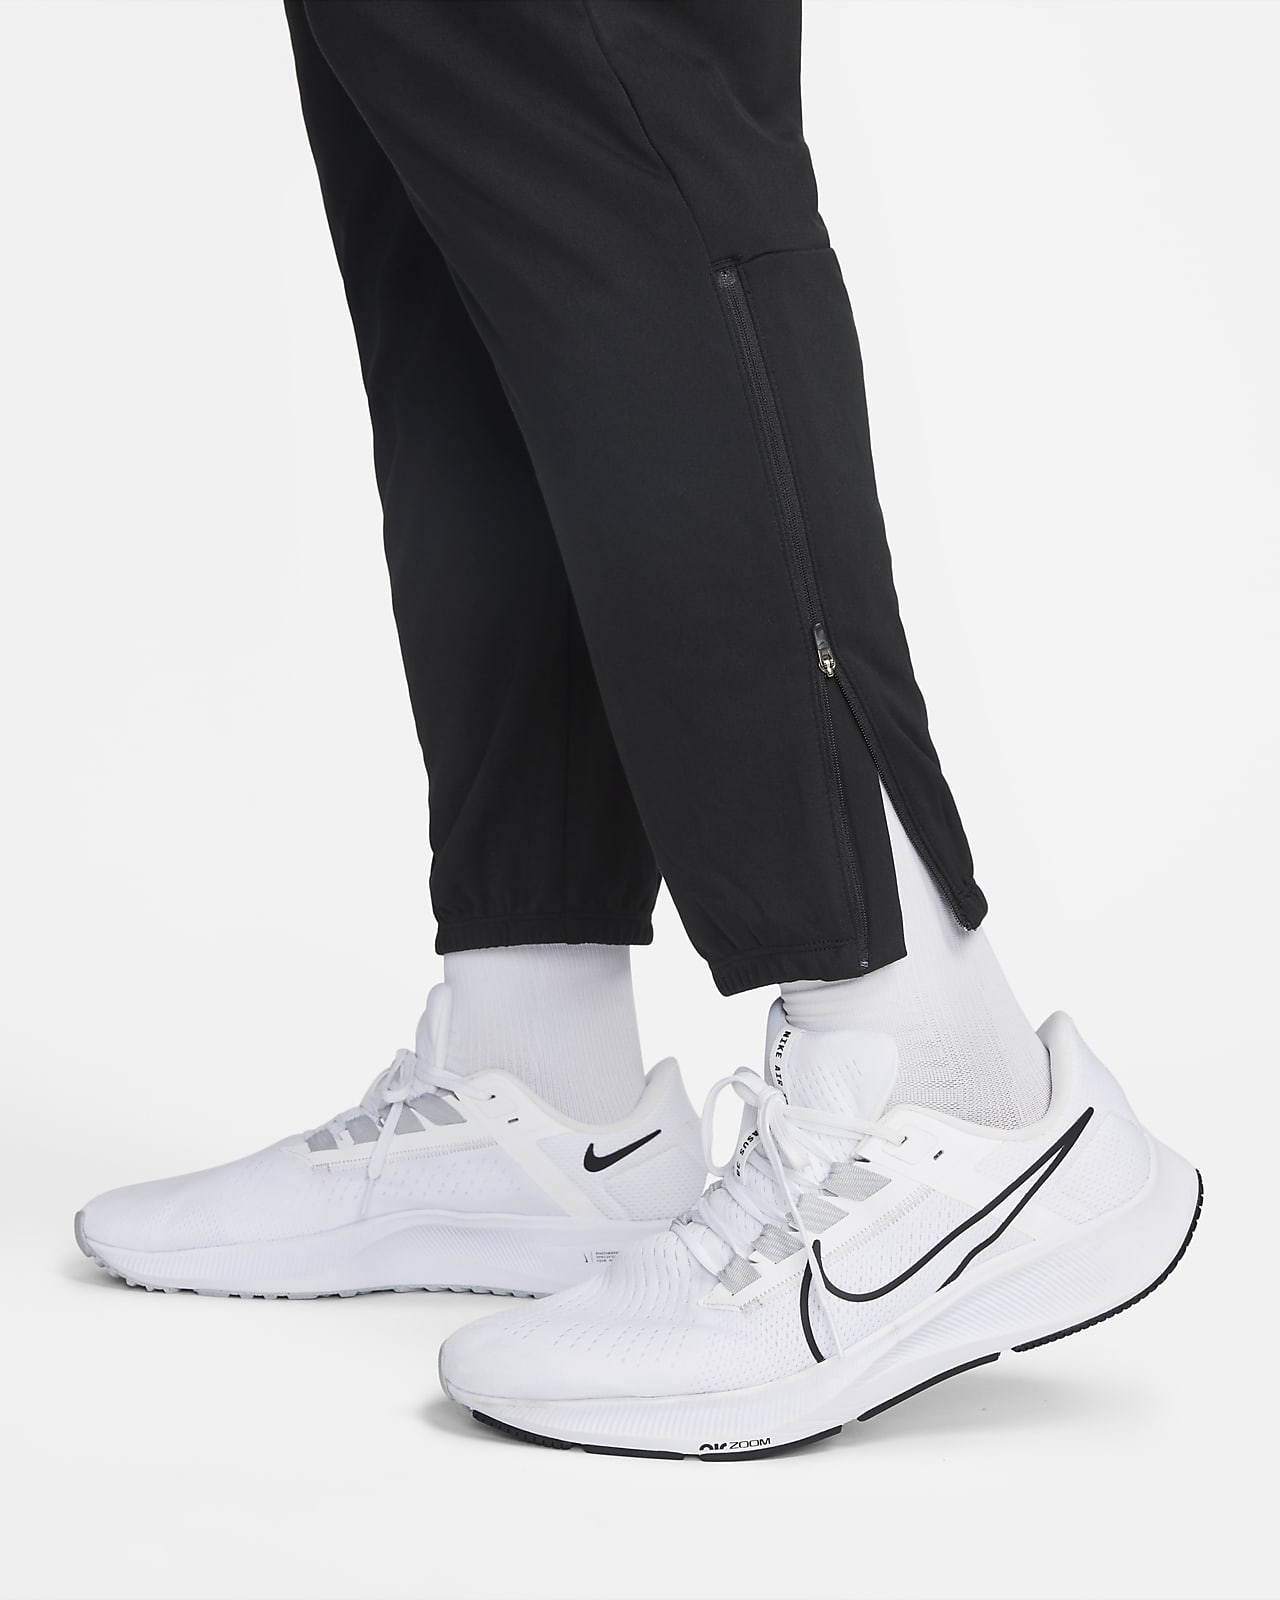 Nike Dri-FIT Challenger Men's Knit Running Pants. Nike.com